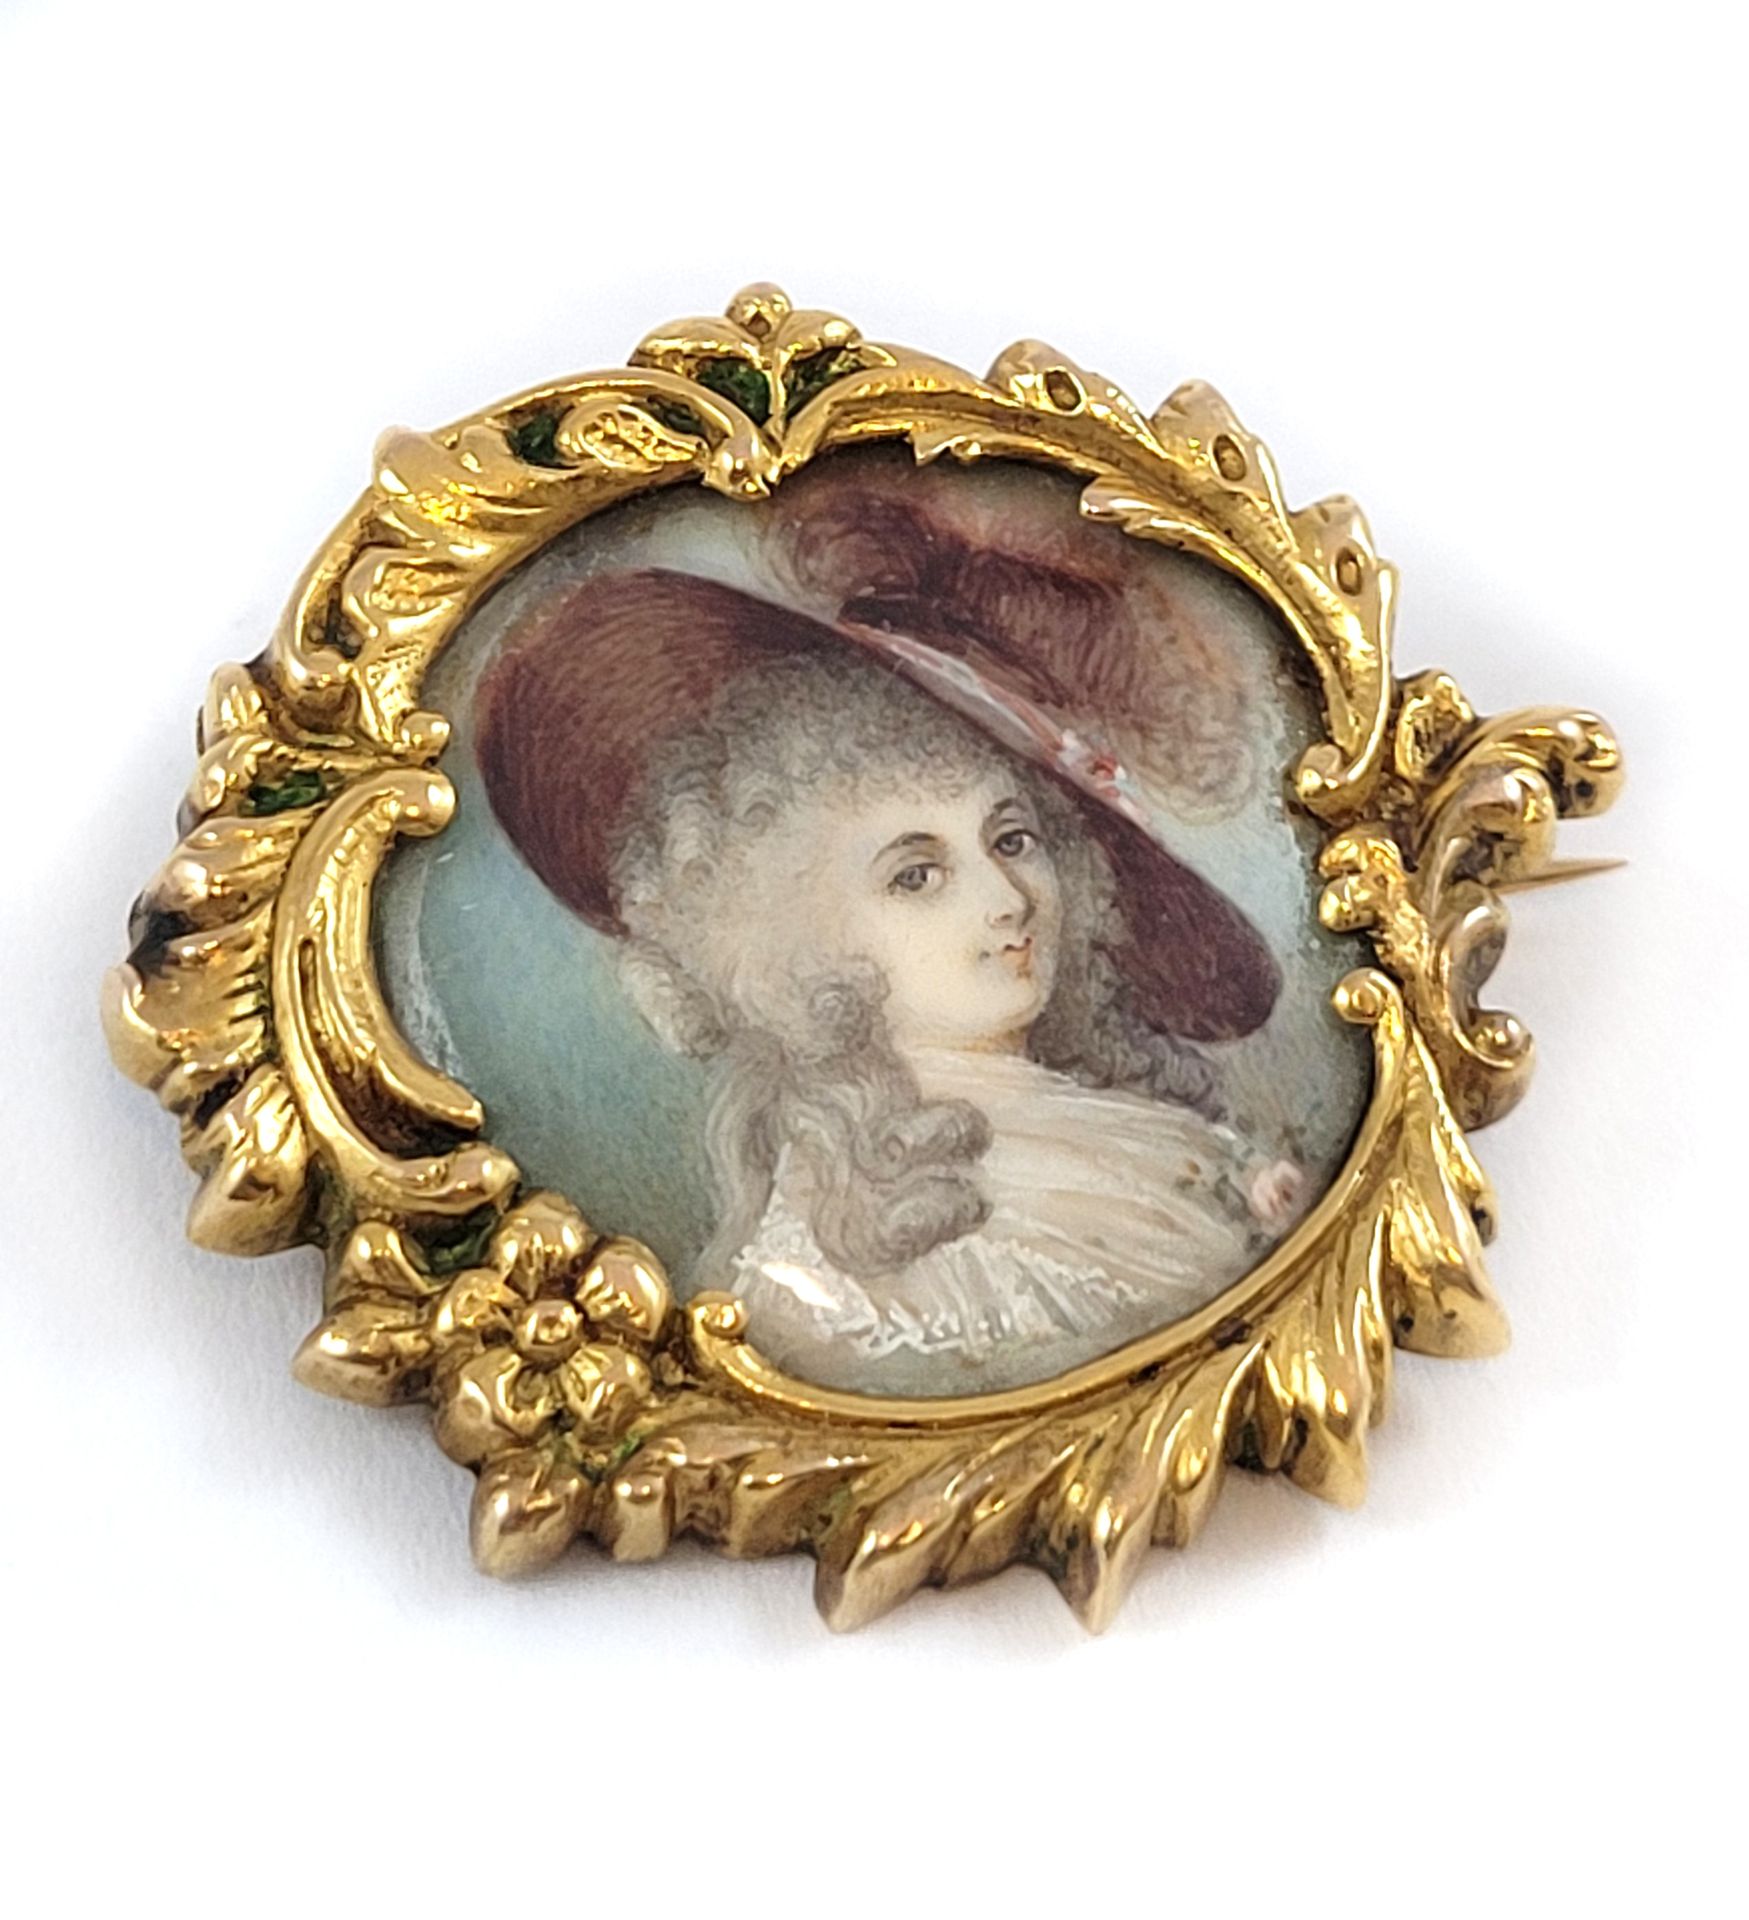 Null 19世纪（浪漫主义时期）
小册子
装饰有一个女人的肖像（手绘，可能是在纸上），在植物装饰中拿着一个部分珐琅。镶嵌在18K黄金和银上。 
尺寸：3.1 &hellip;